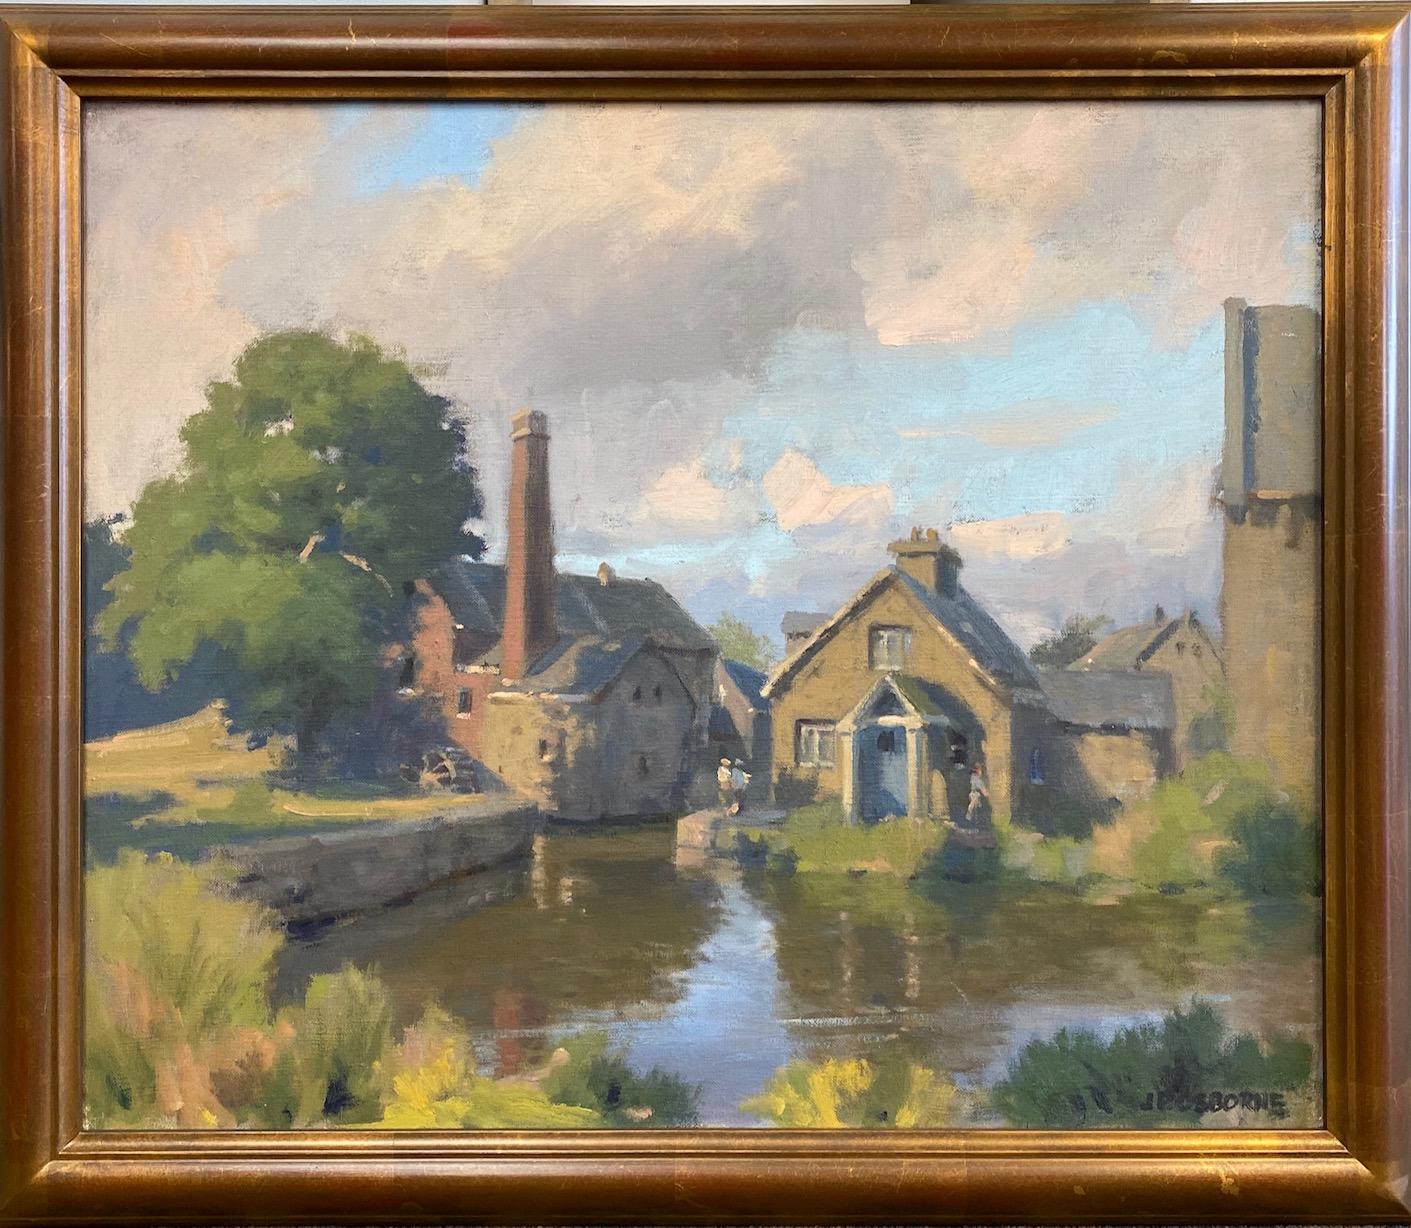 Figurative Painting John Phillip Osborne - « The Mill, First Slaughter », paysage anglais impressionniste original